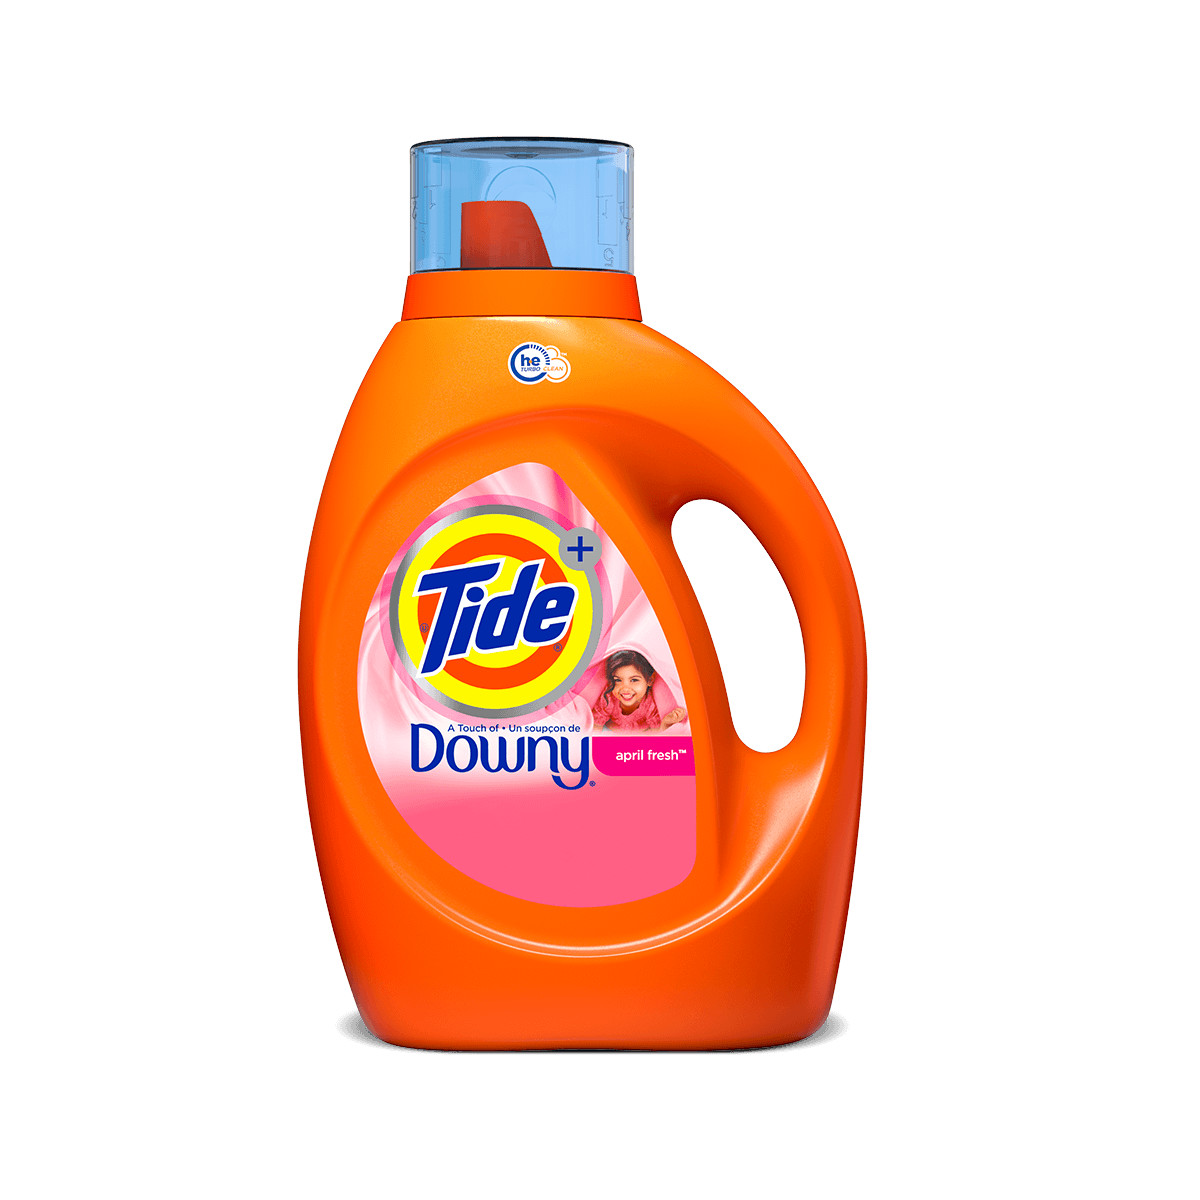 Tide Ultra OXI High Efficiency Liquid Laundry Detergent